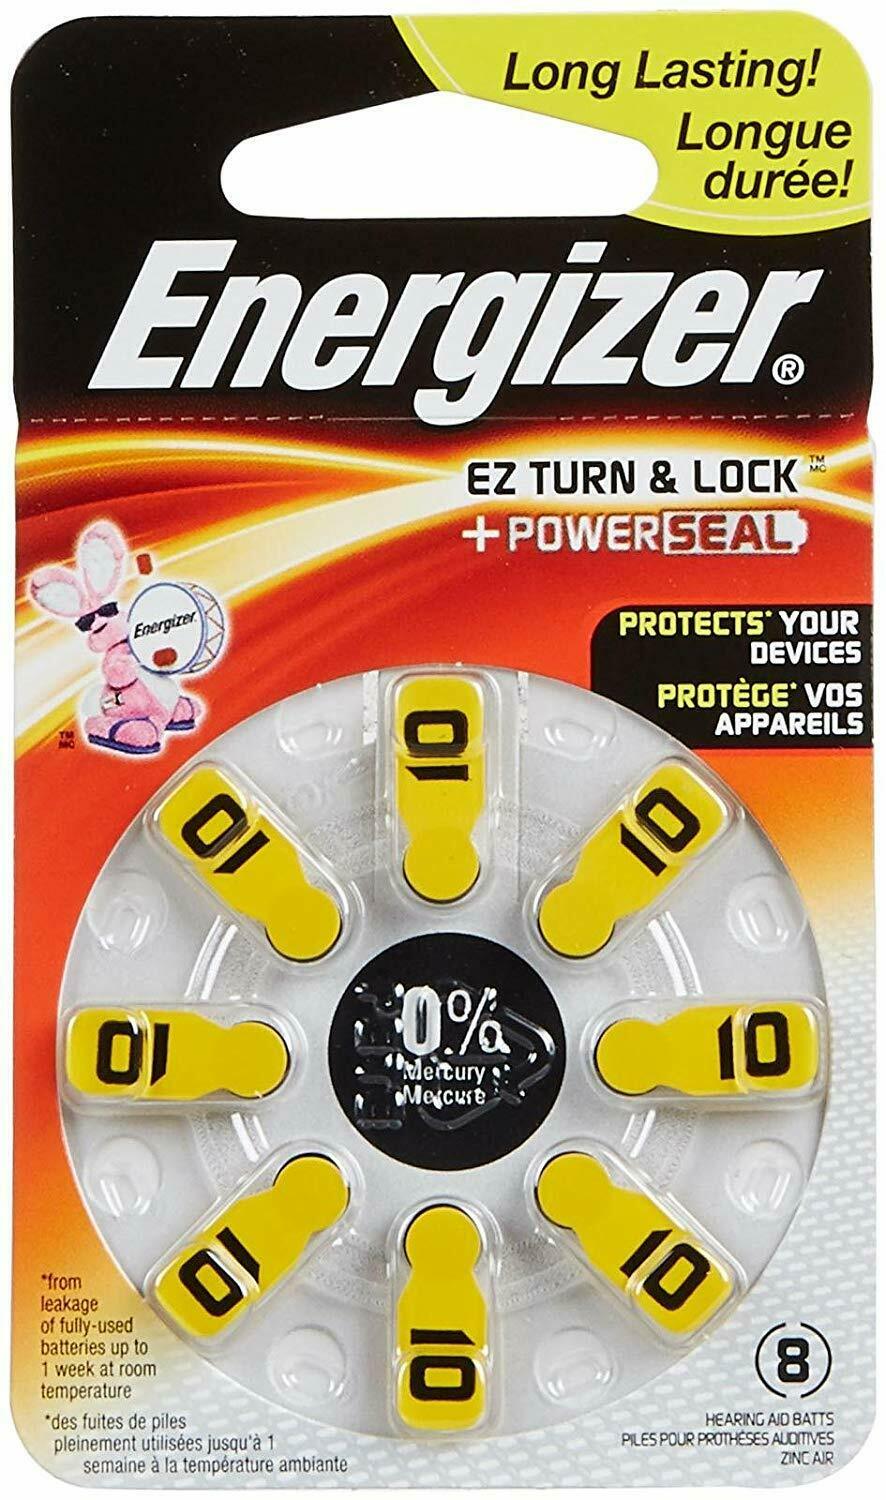 Energizer EZ Turn & Lock AZ10DP-8 Zinc Air Hearing Aid Batteries